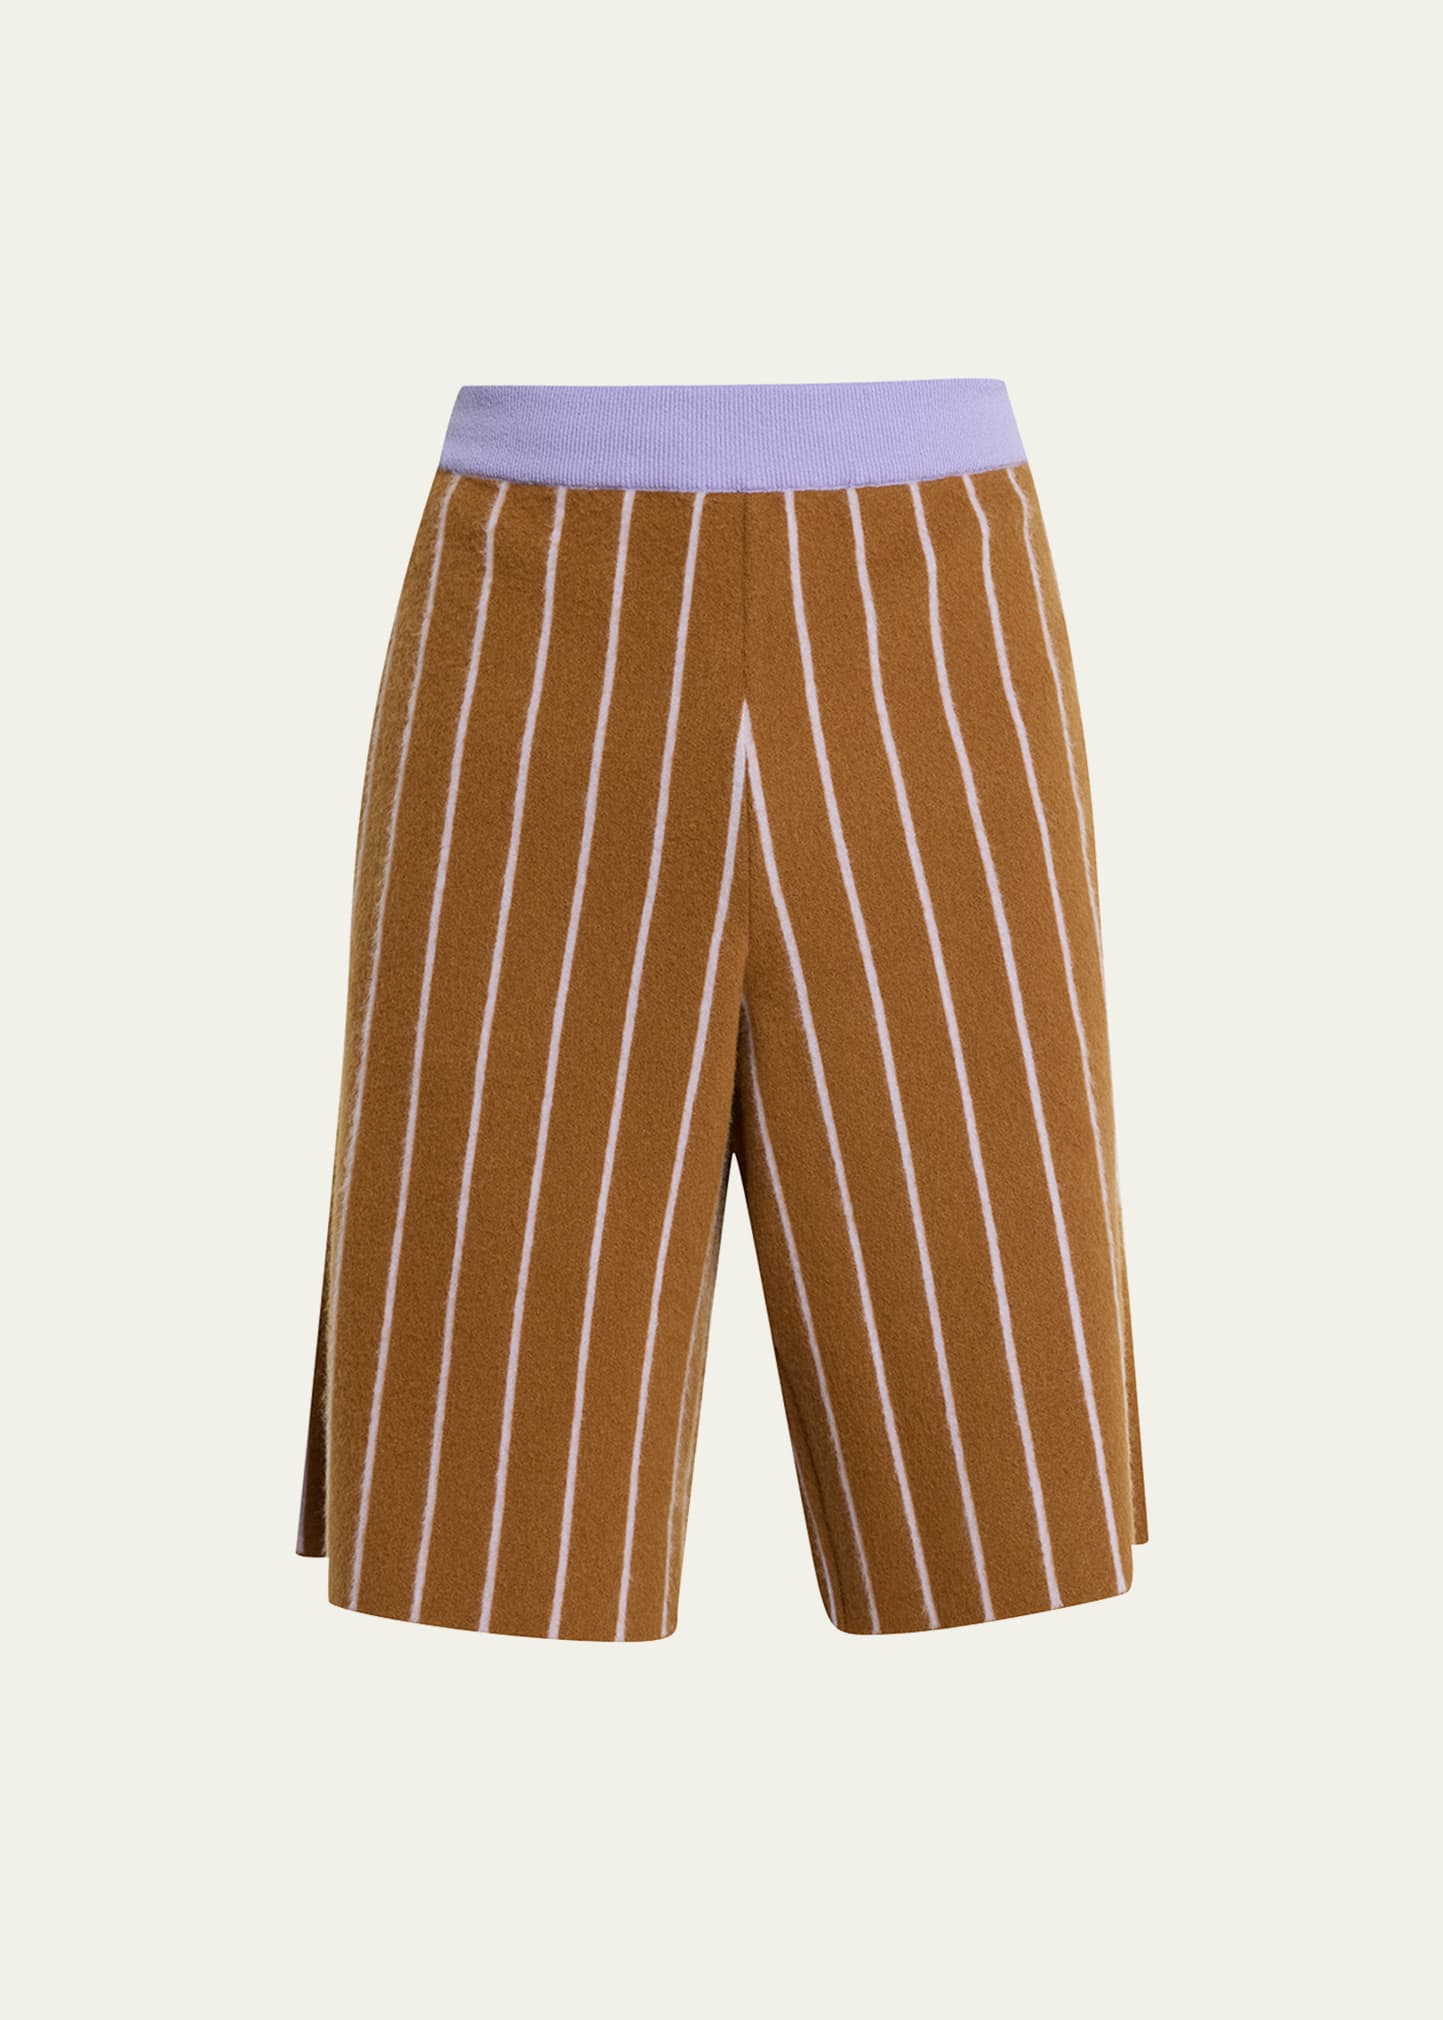 Men's Brushed Cashmere Pinstripe Shorts